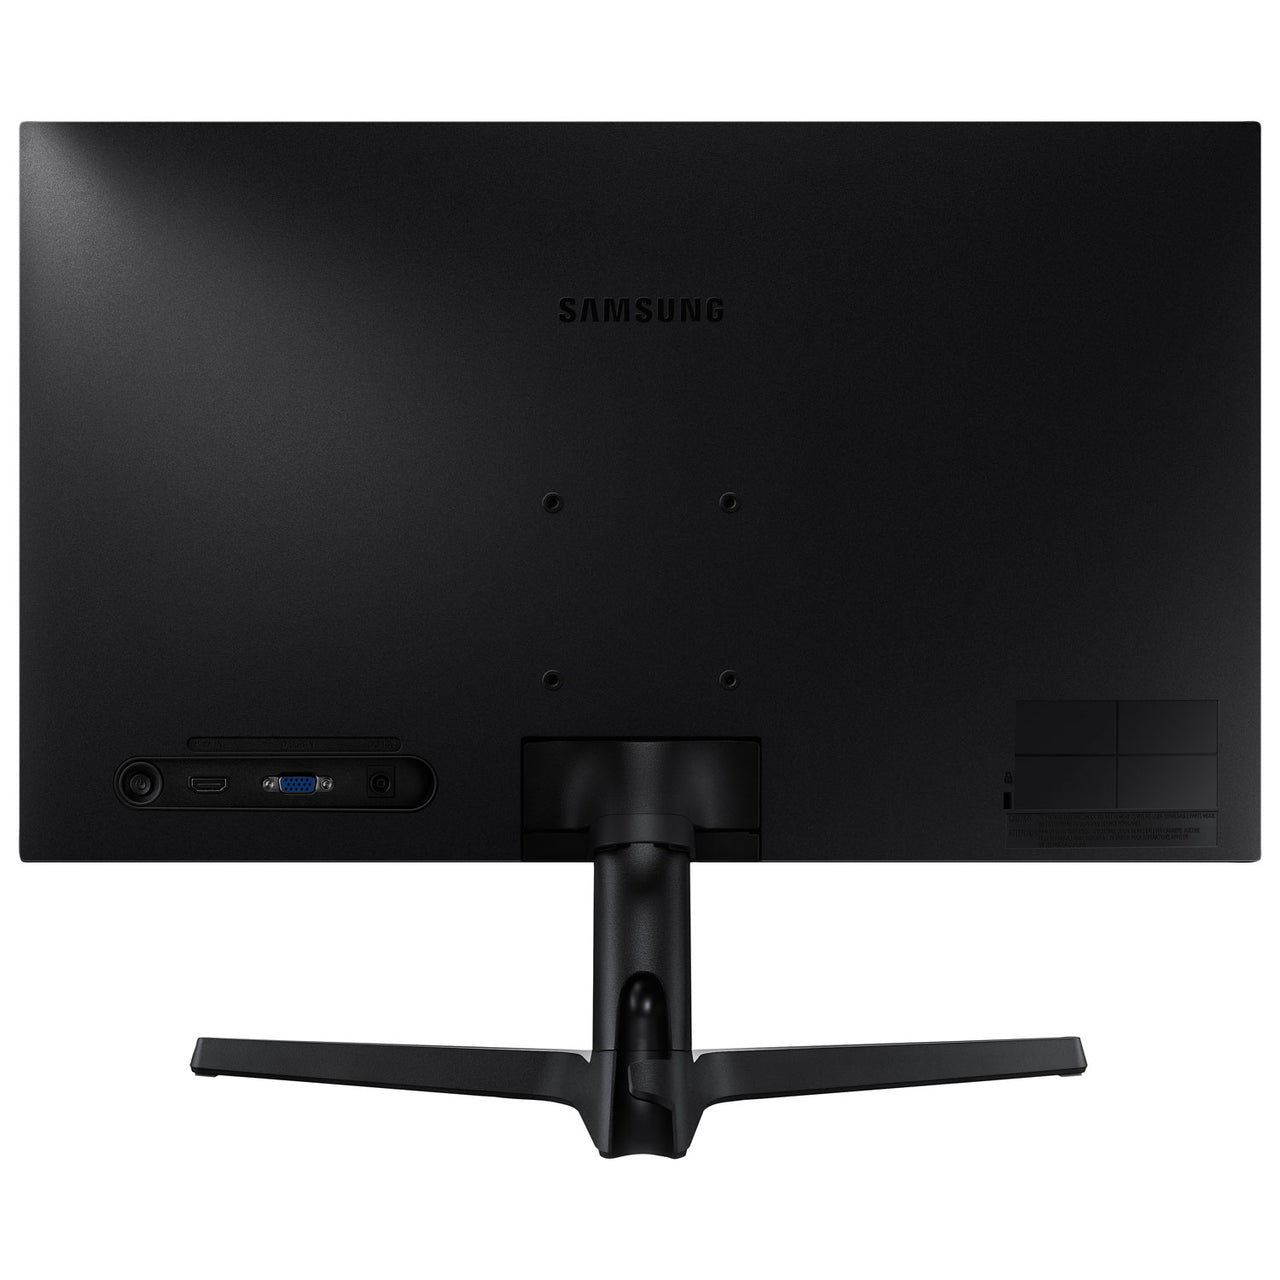 Samsung 24" FHD 75Hz 5ms GTG VA LCD FreeSync Gaming Monitor (LS24R35AFHNXZA) - Black